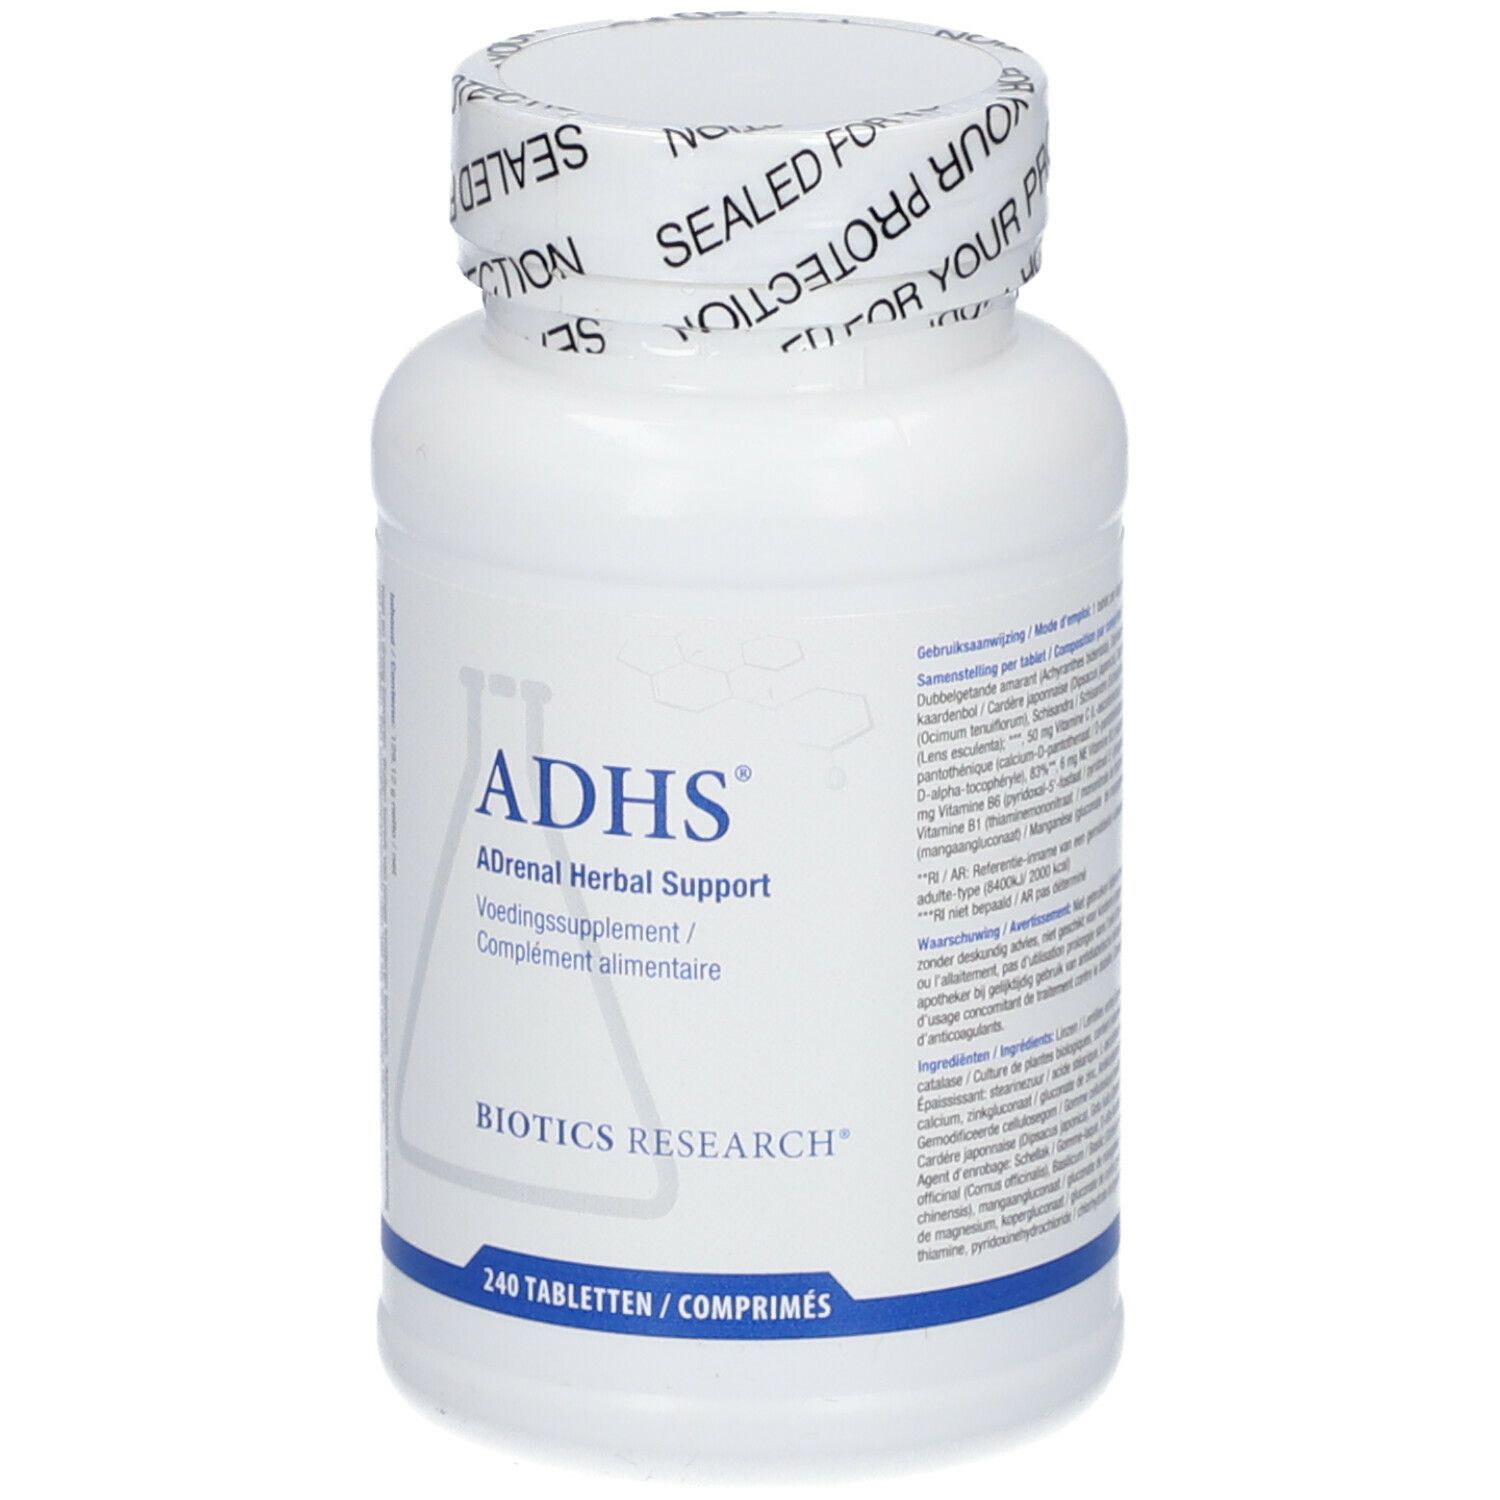 Biotics Research ® ADHS ®